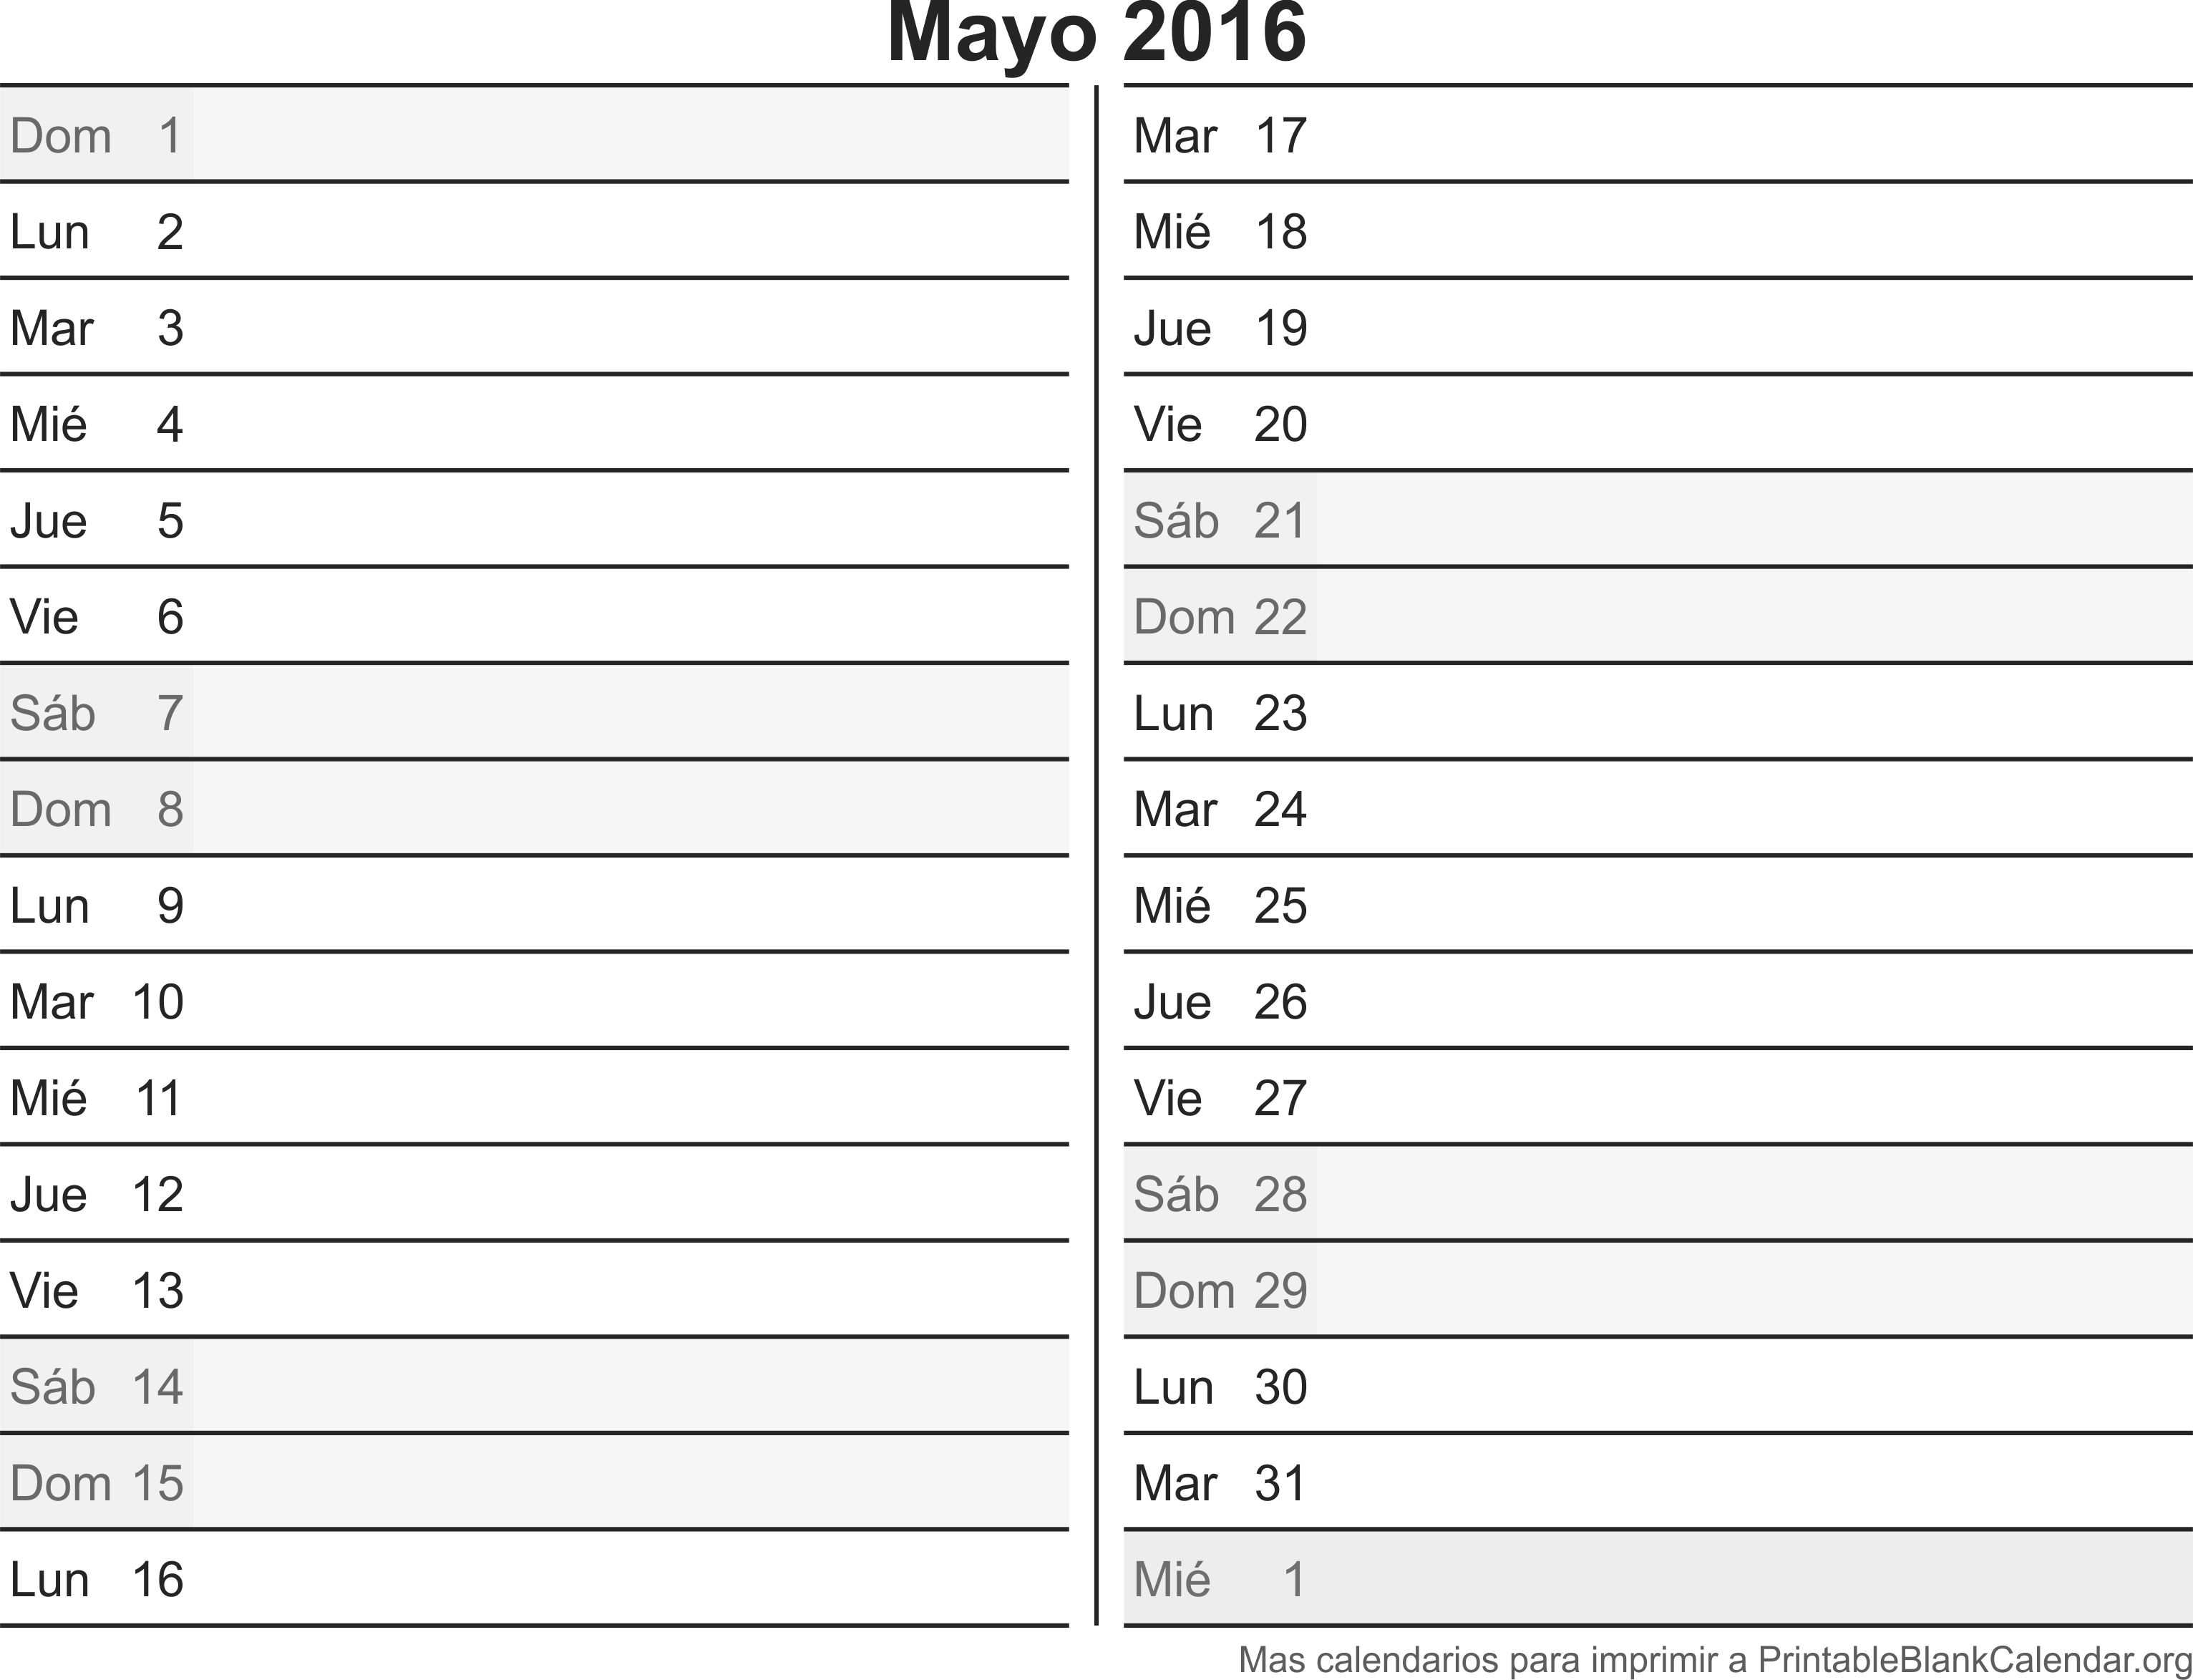 Calendario para imprimir Mayo 2016